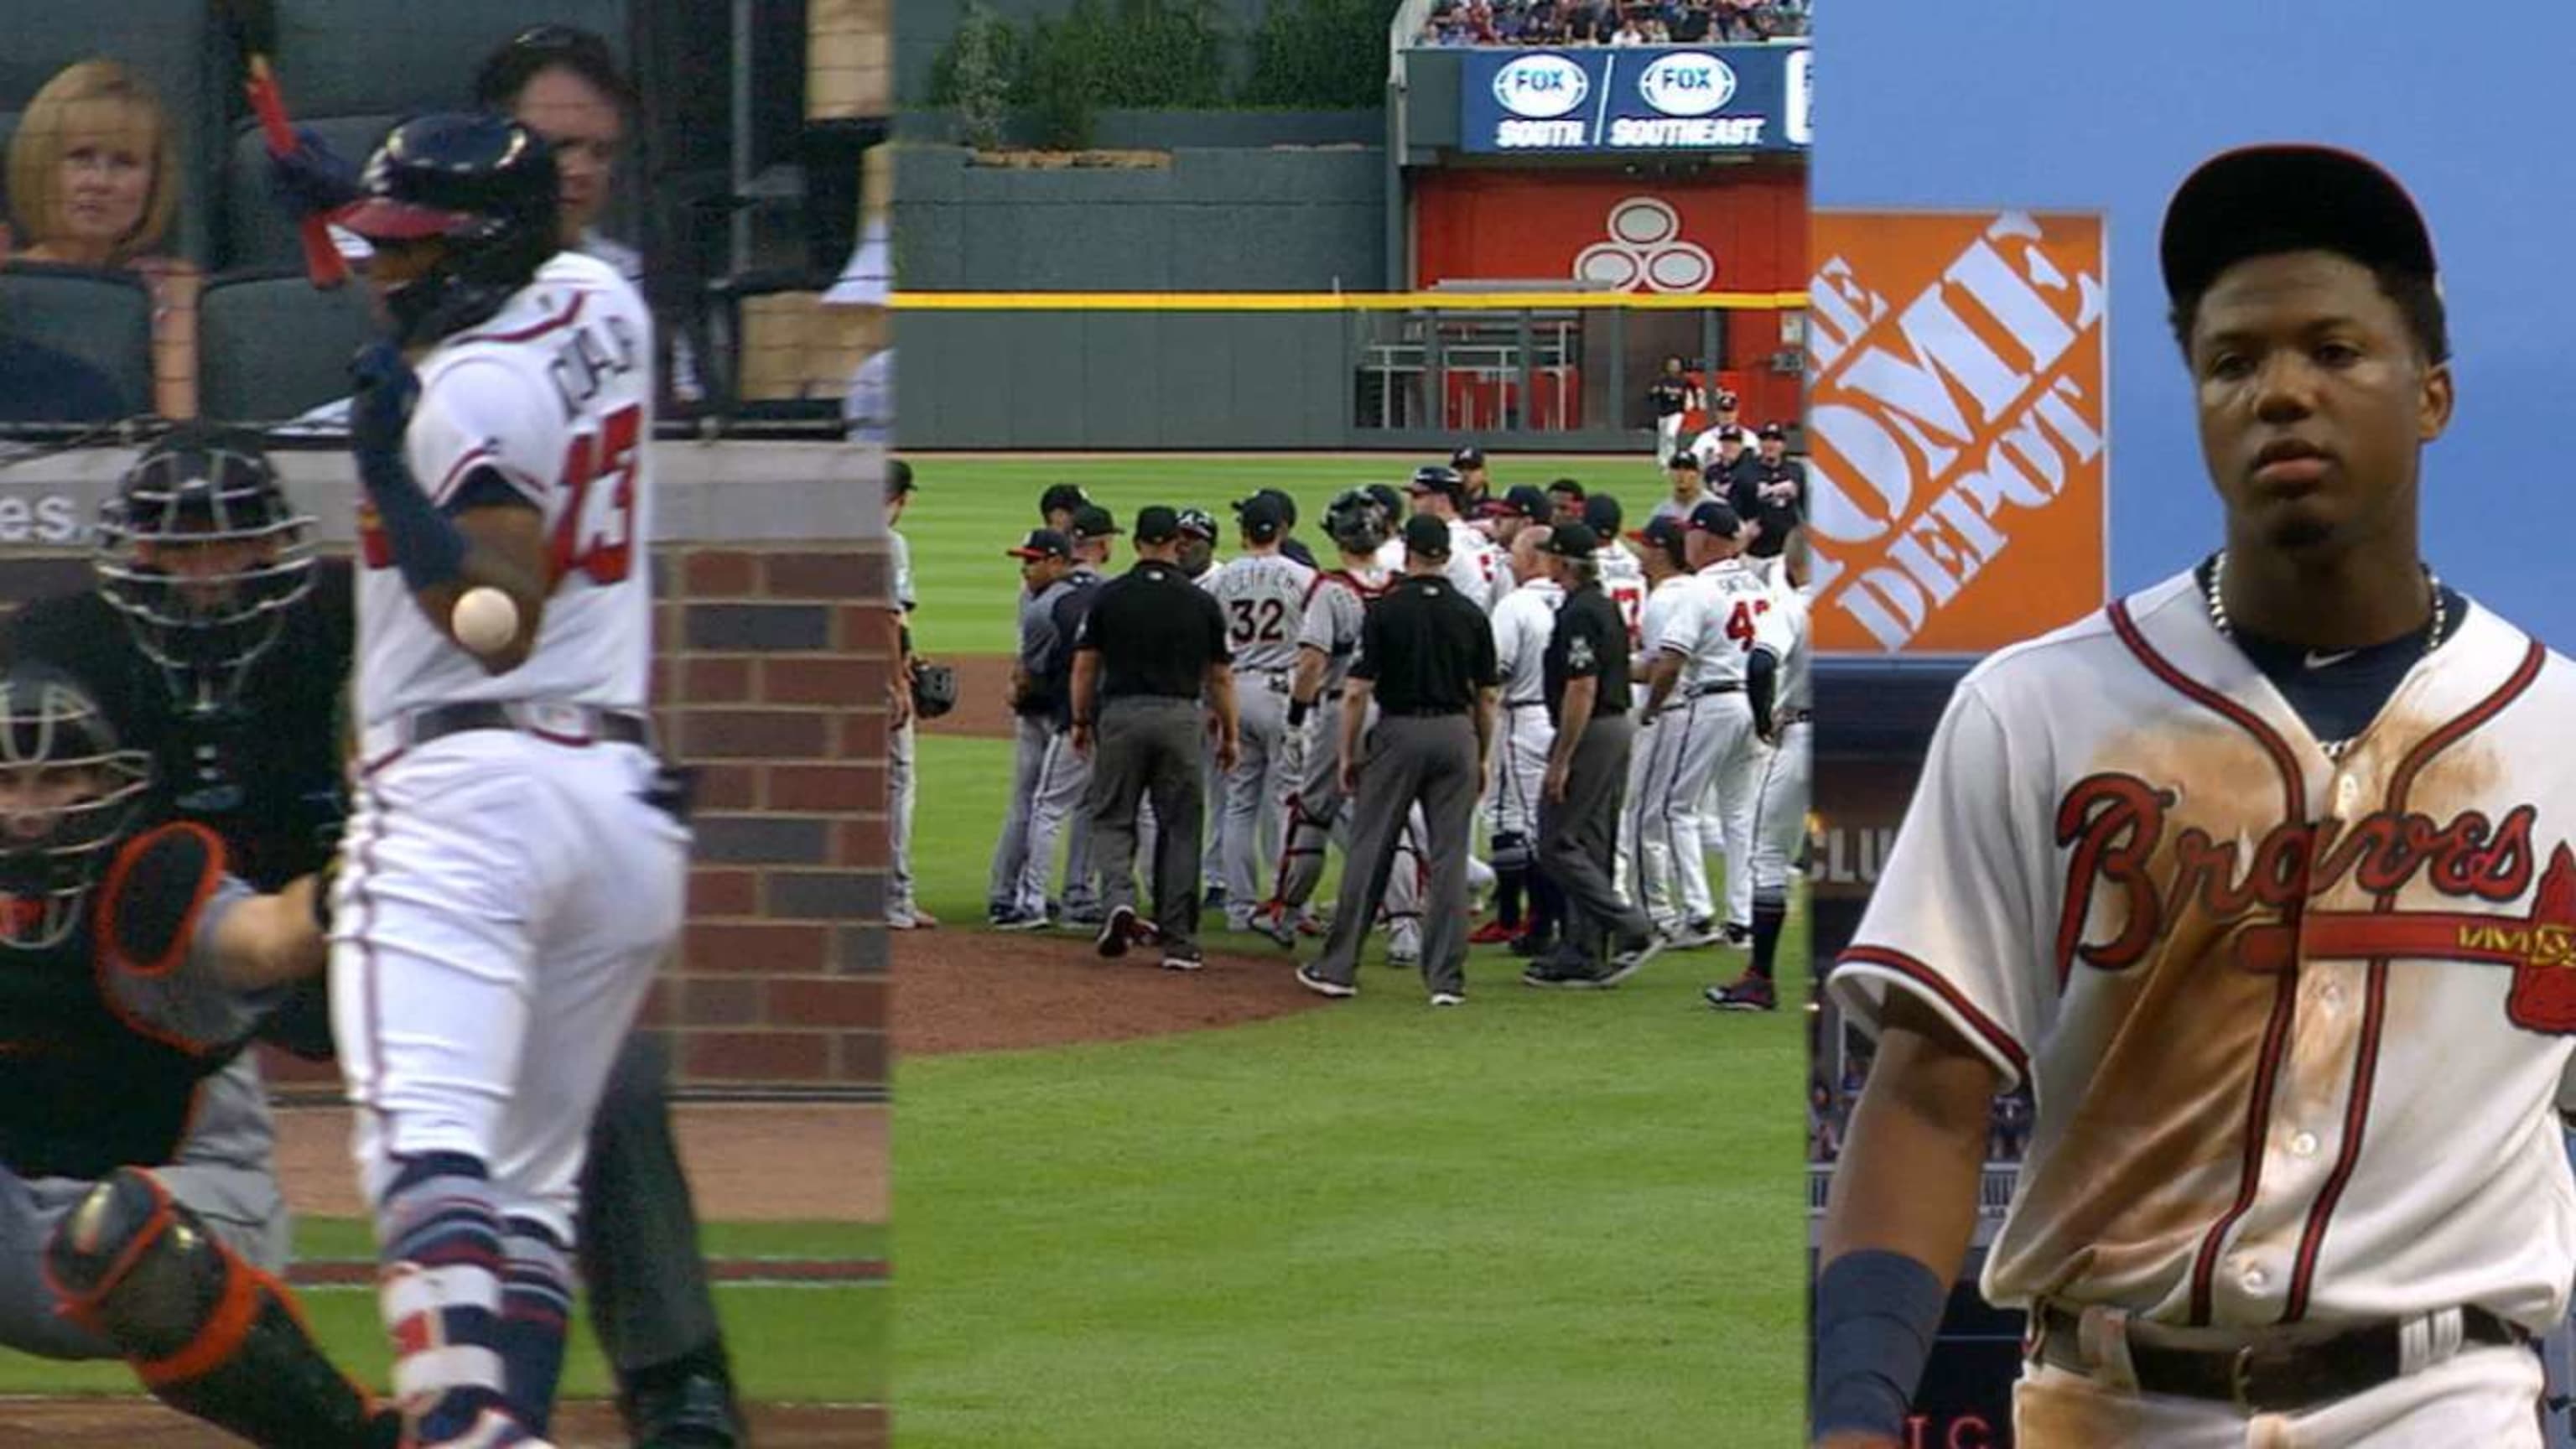 Baseball has become a little bit soft': Johan Oviedo fires back at Braves'  Ronald Acuna Jr. after emotional exchange